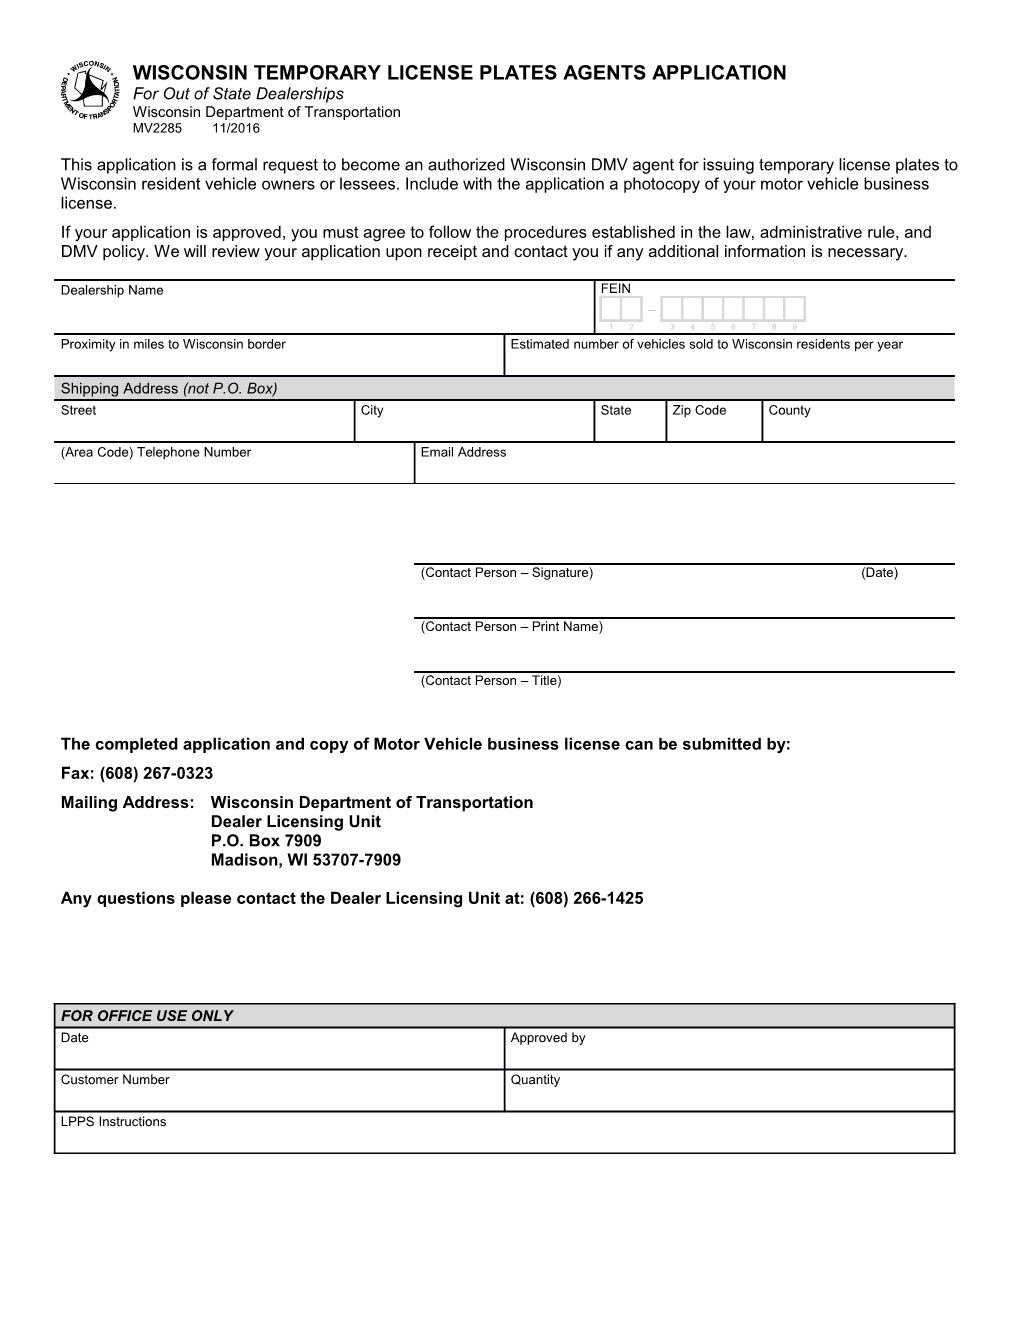 MV2285 Temporary License Plates Agents Application